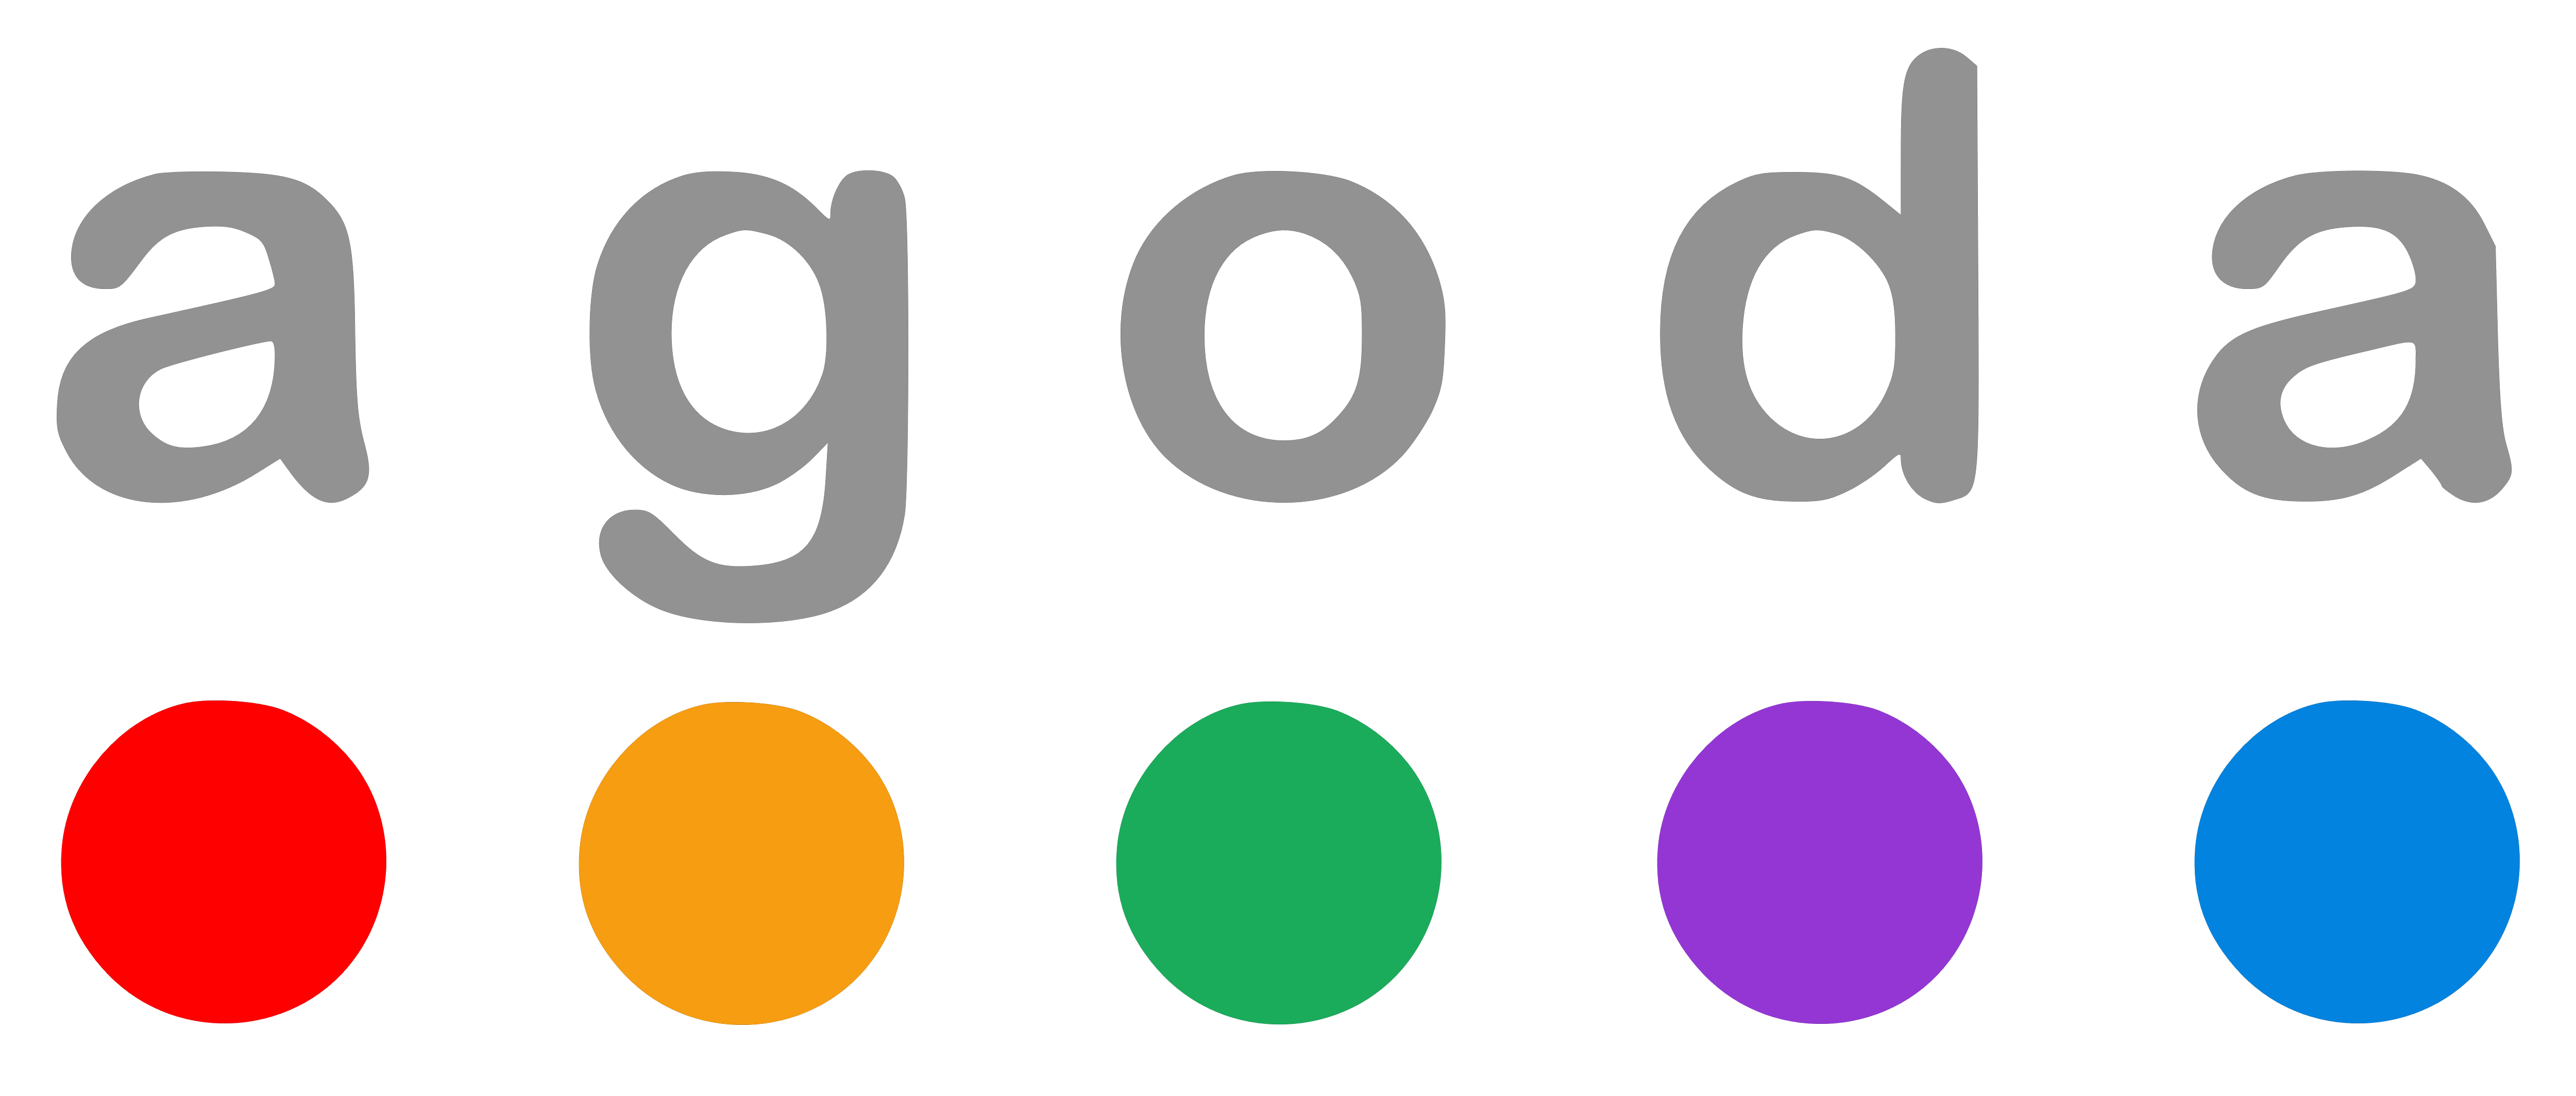 agoda-logos-download